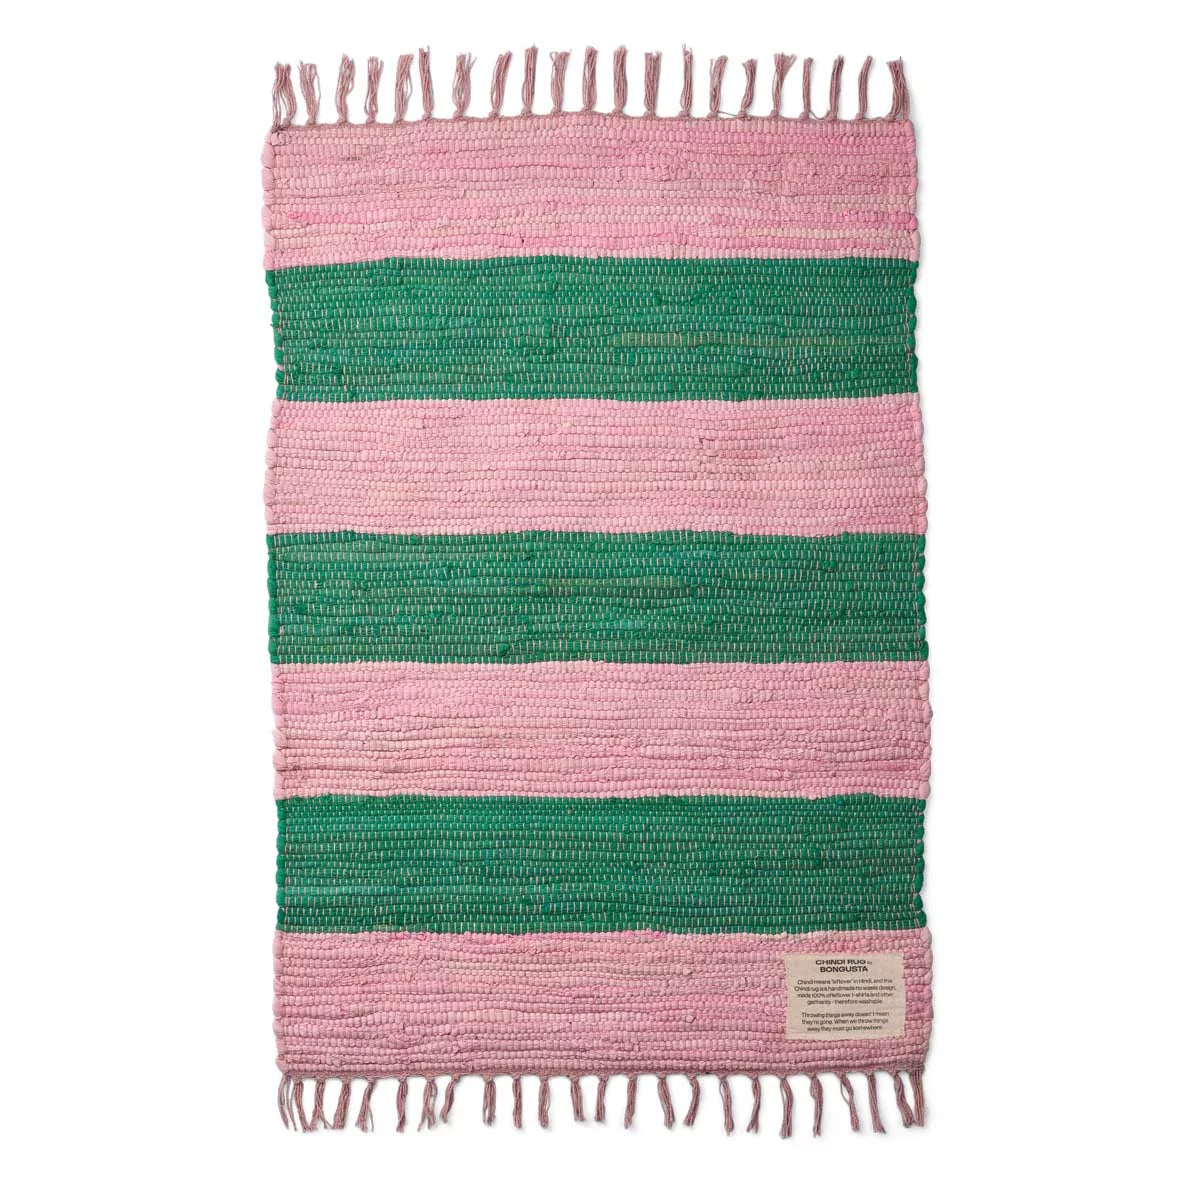 Bongusta - Chindi rug, 60x90cm pink & grass by Bongusta | stylebykul